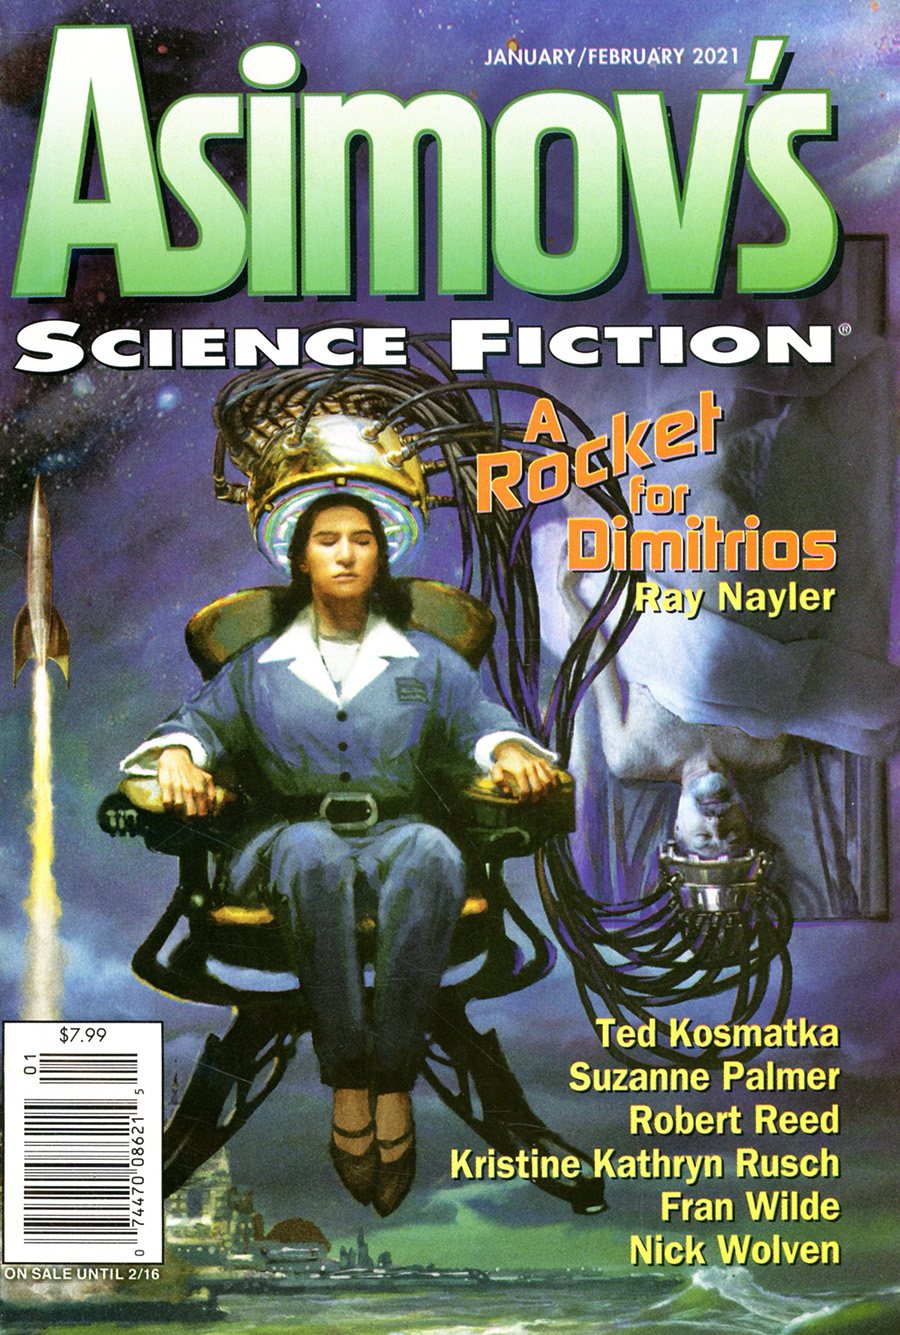 Asimovs Science Fiction Vol 45 #01 & 02 January / February 2021